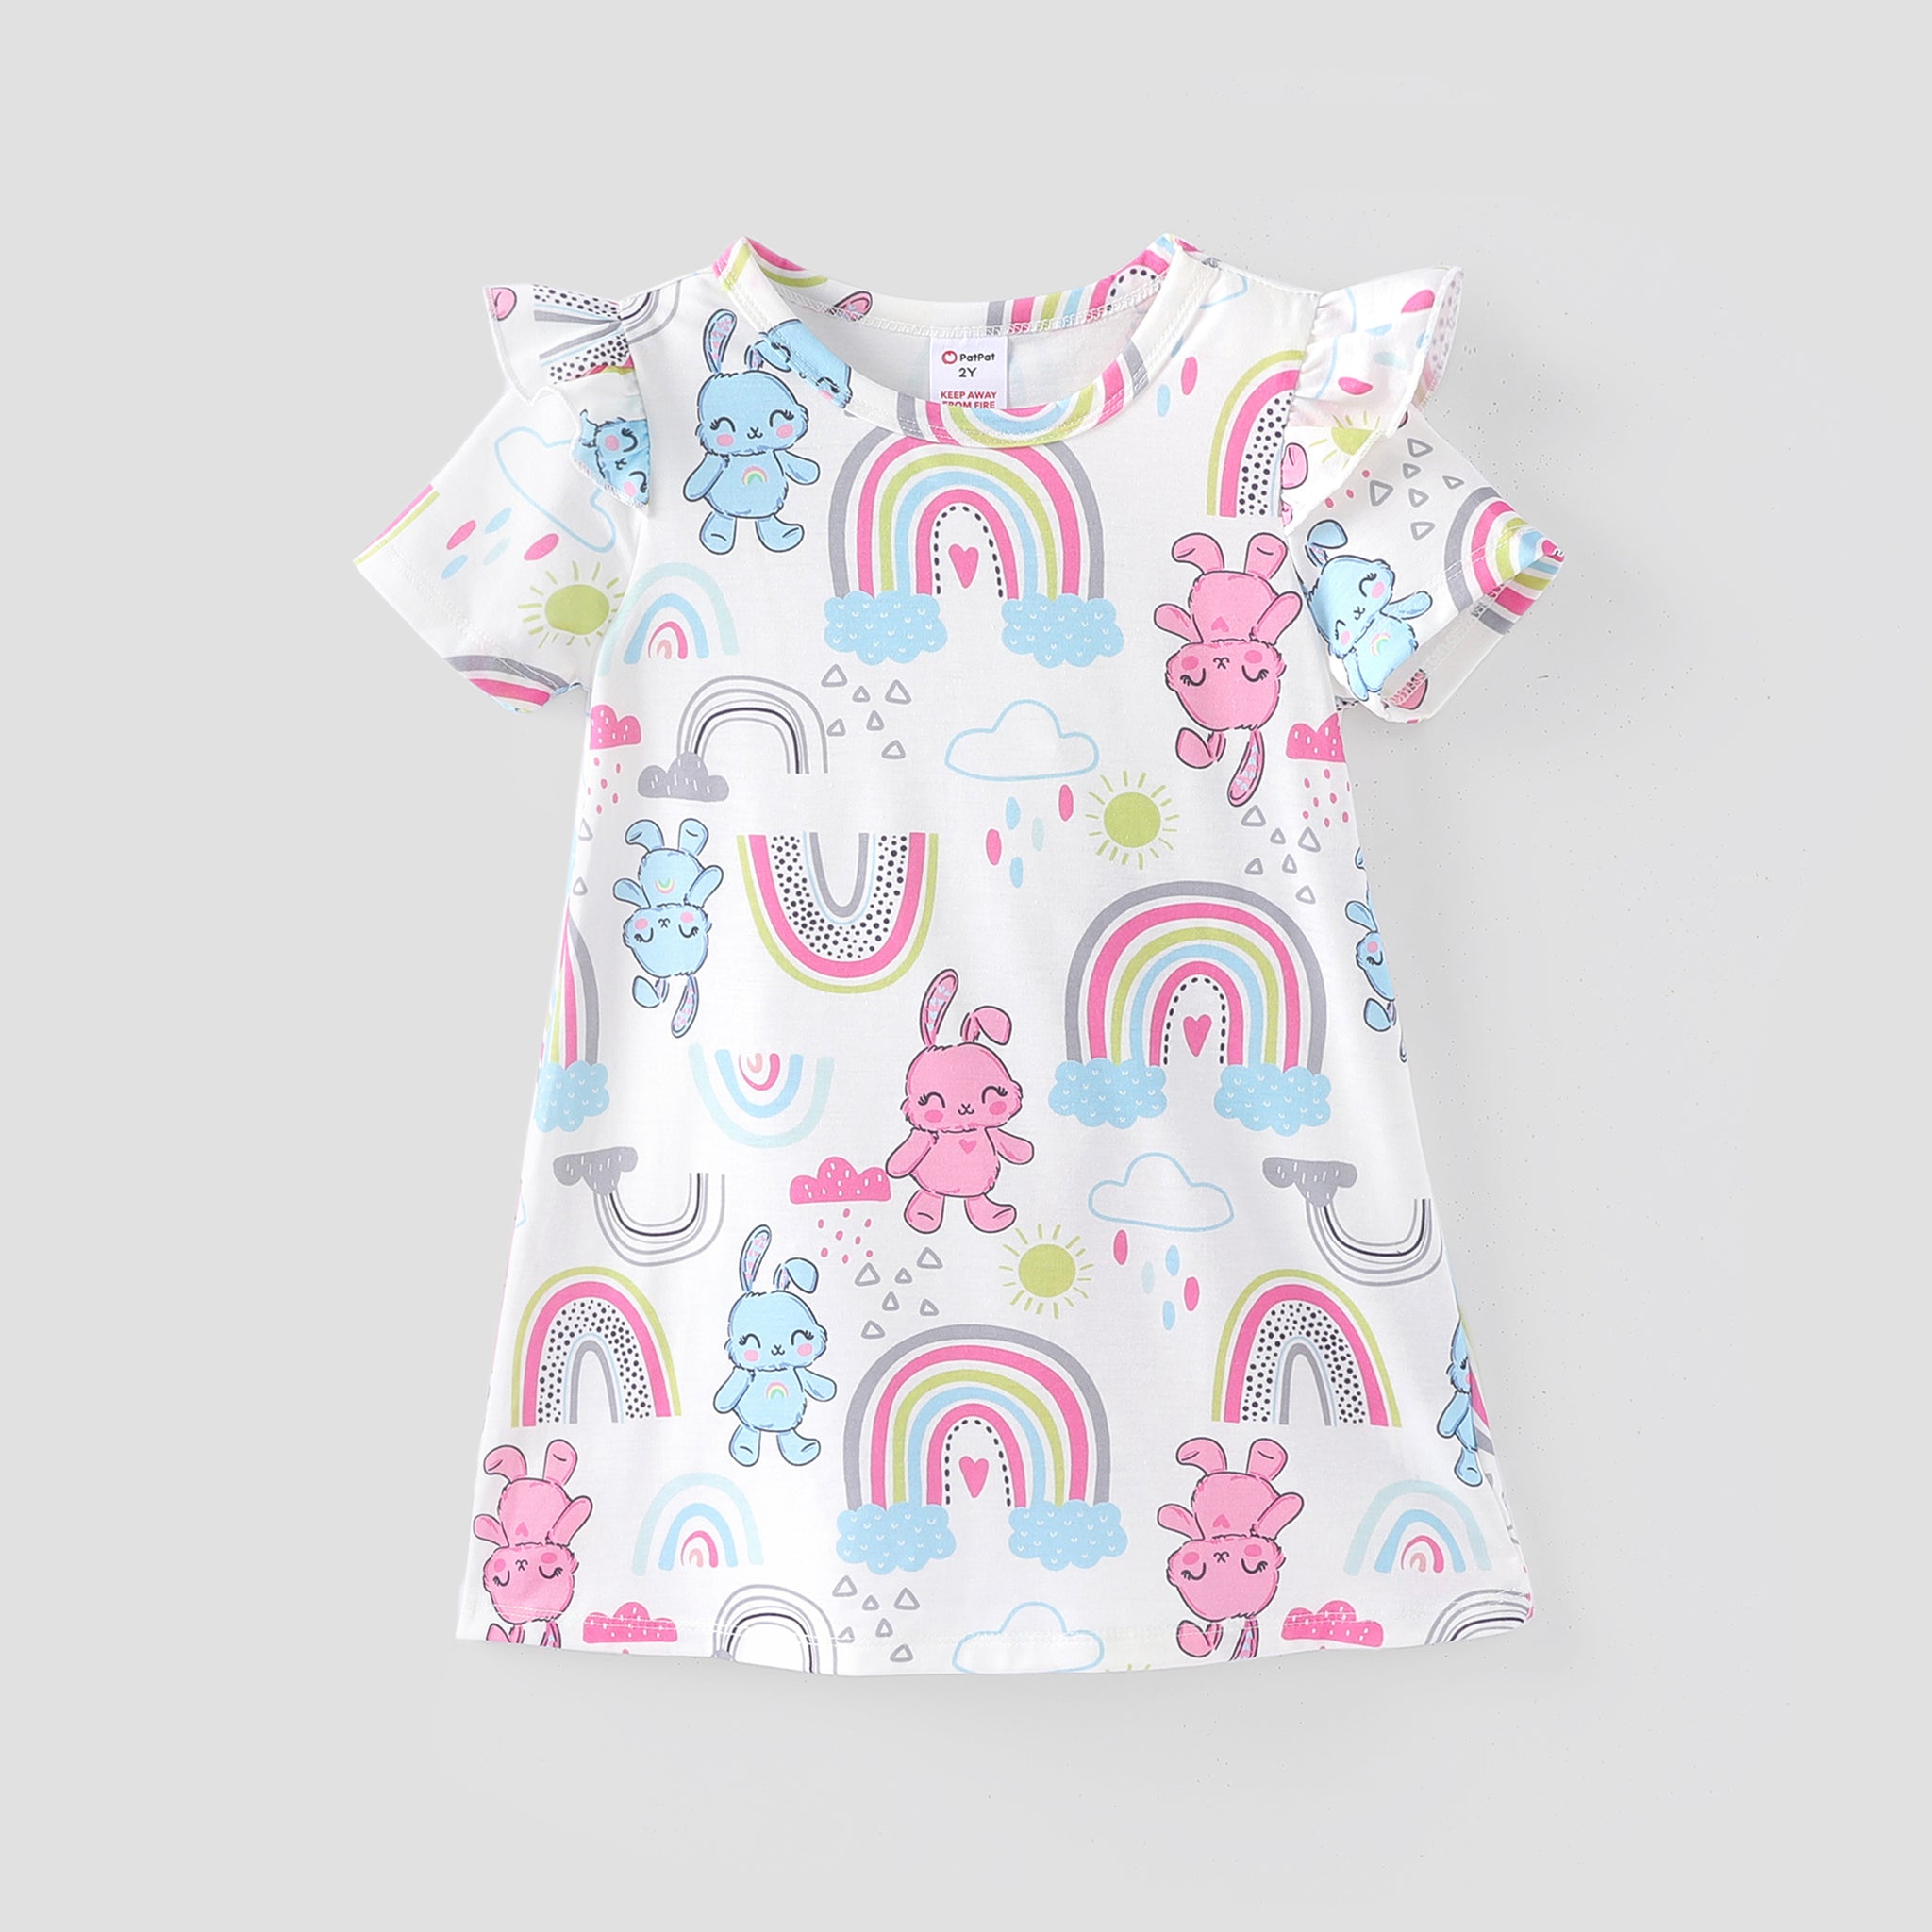 Toddler/Kid Girl Animal Print Flutter Sleeve Dress/ Vented Clogs Shoes